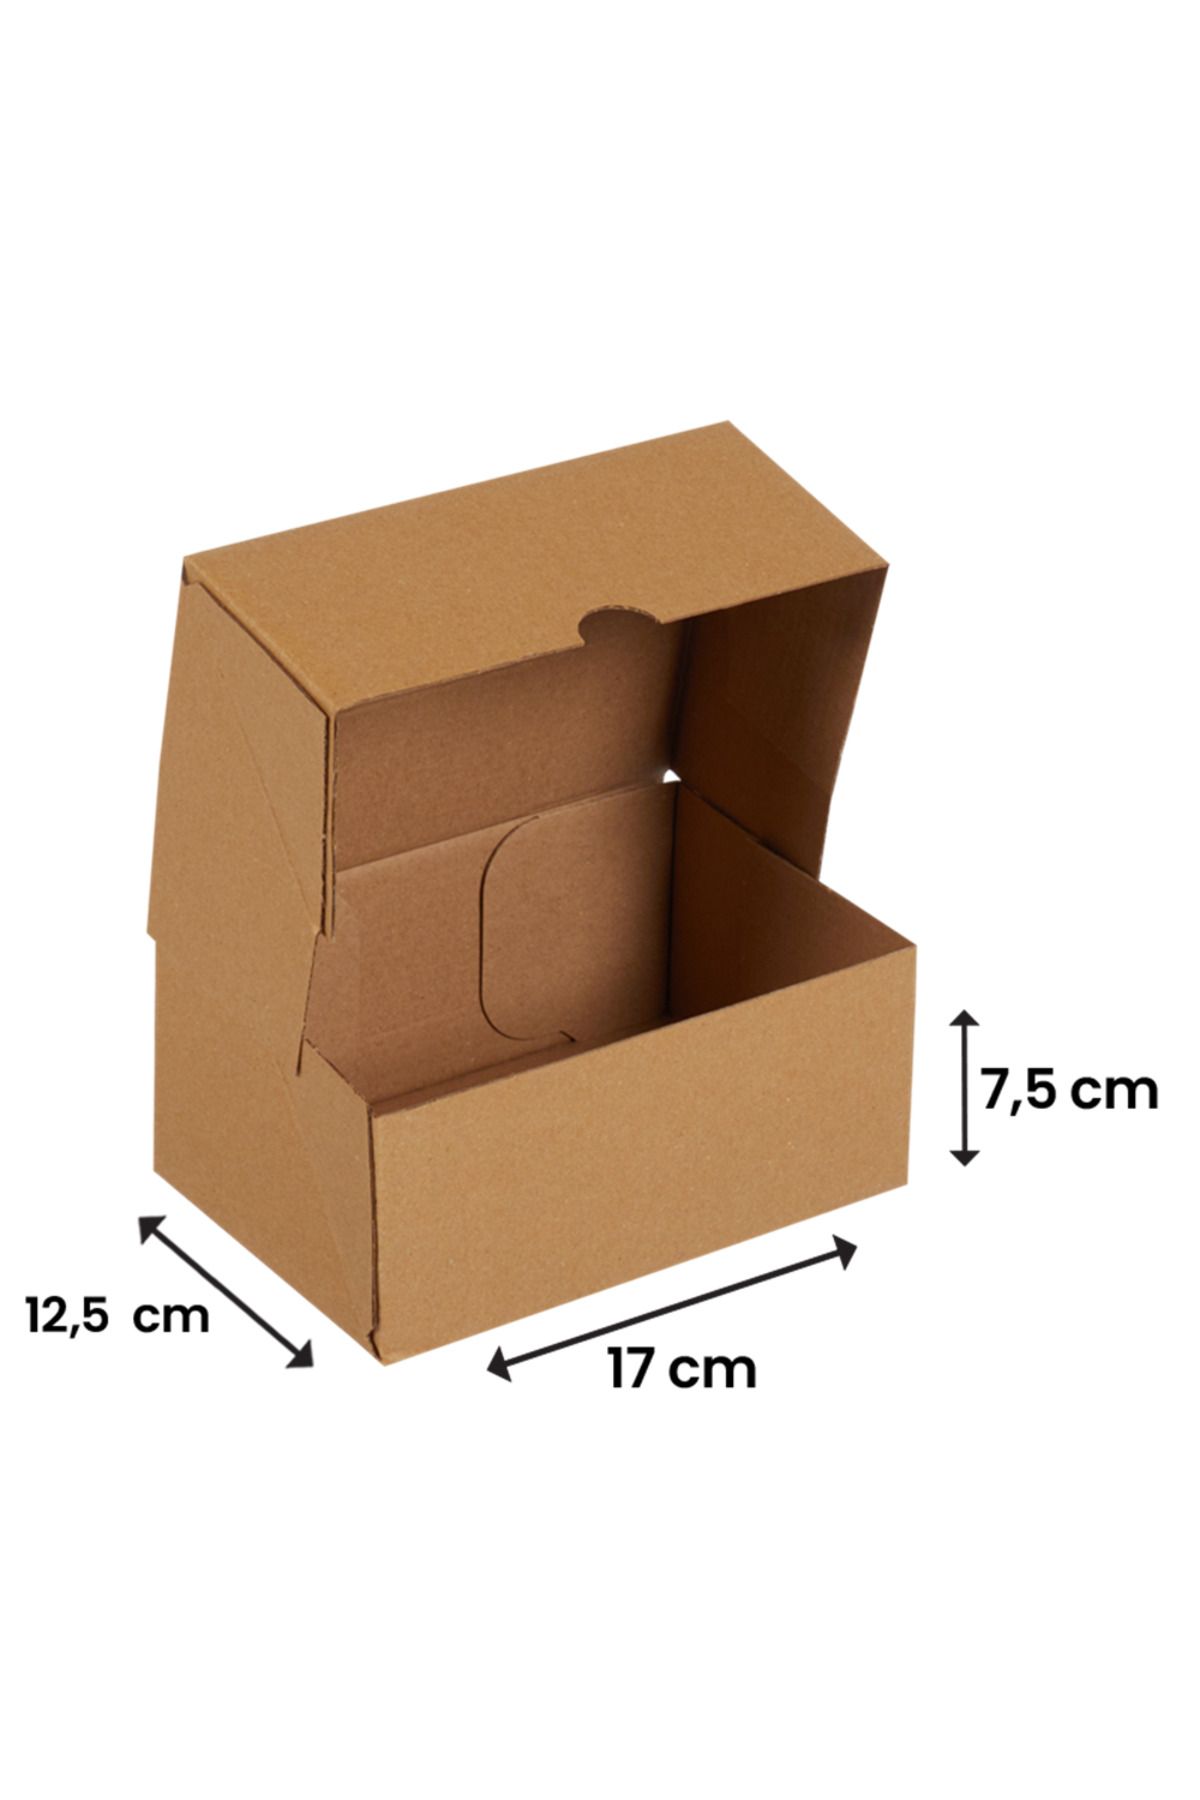 Packanya 17x12,5x7,5-100 Adet Kesimli Karton Kutu - Internet Ve Kargo Kutusu